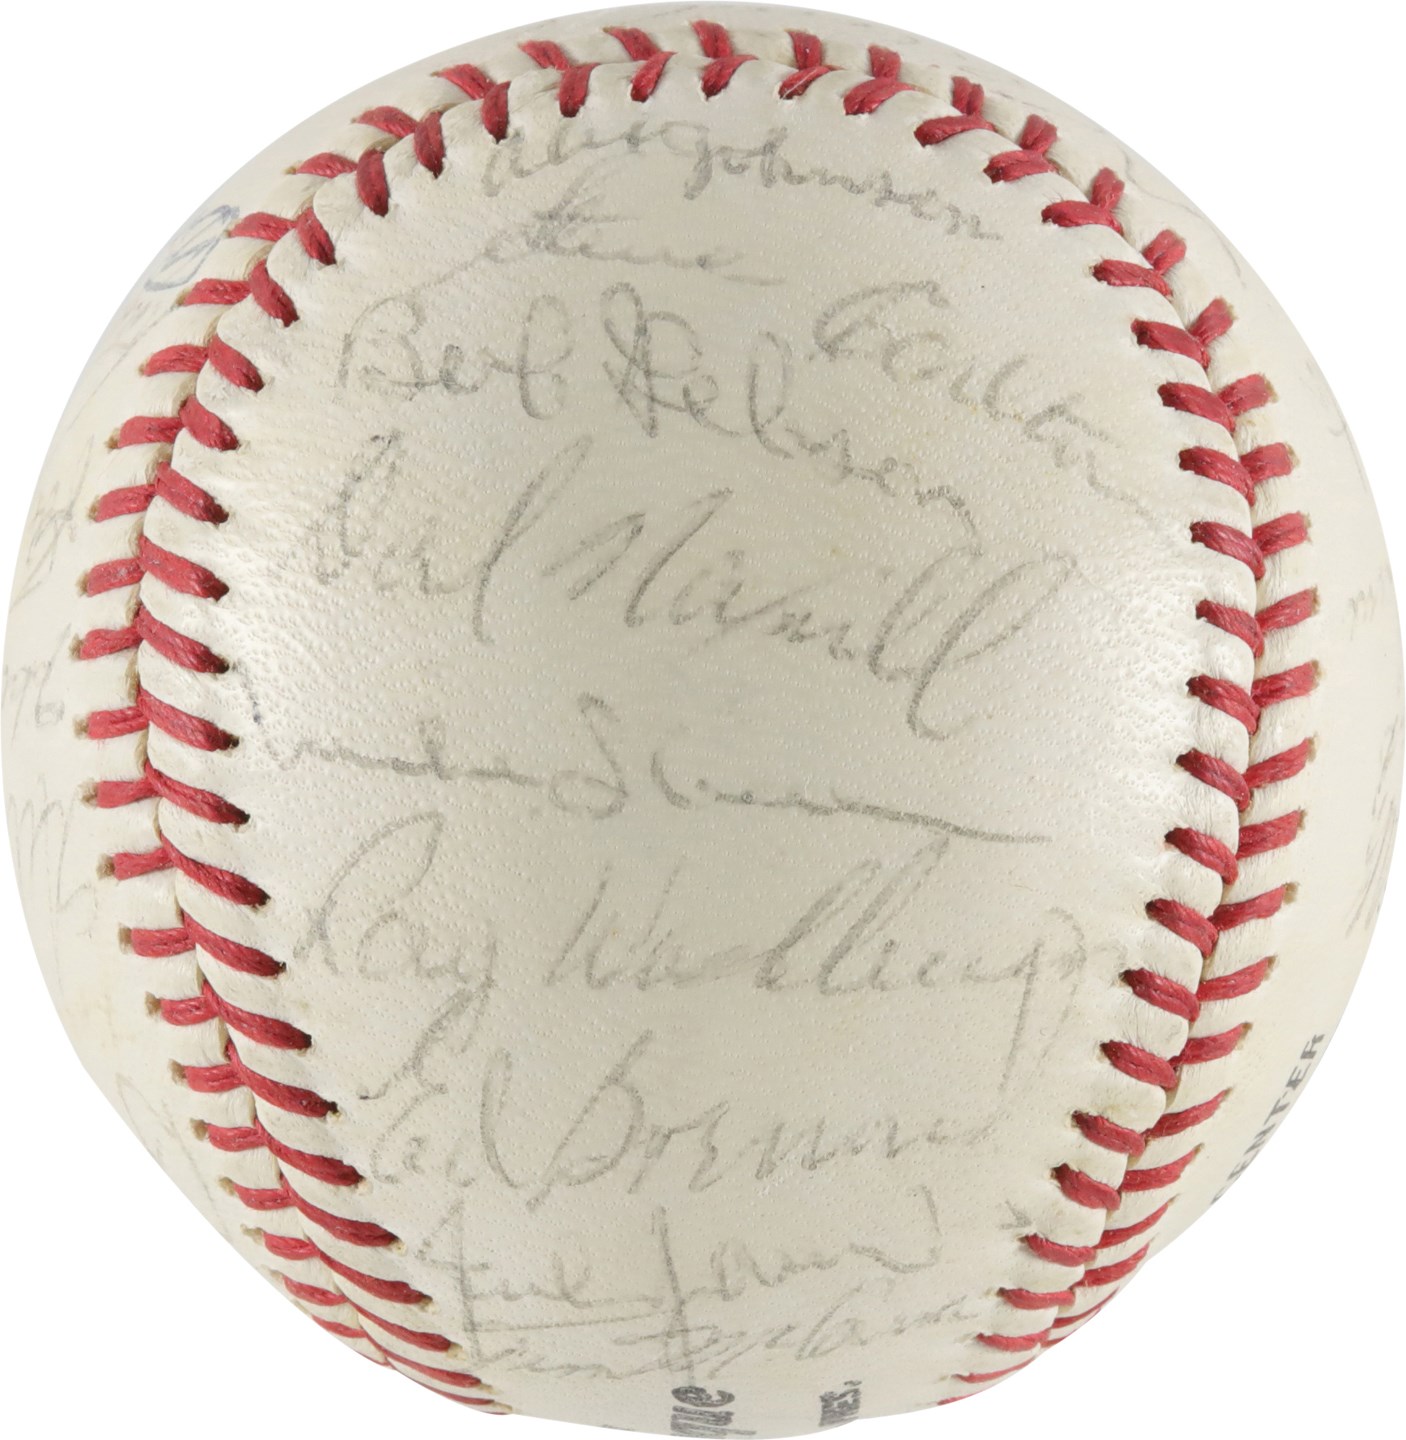 Baseball Autographs - 1967 St. Louis Cardinals World Champions Team-Signed Baseball (PSA)